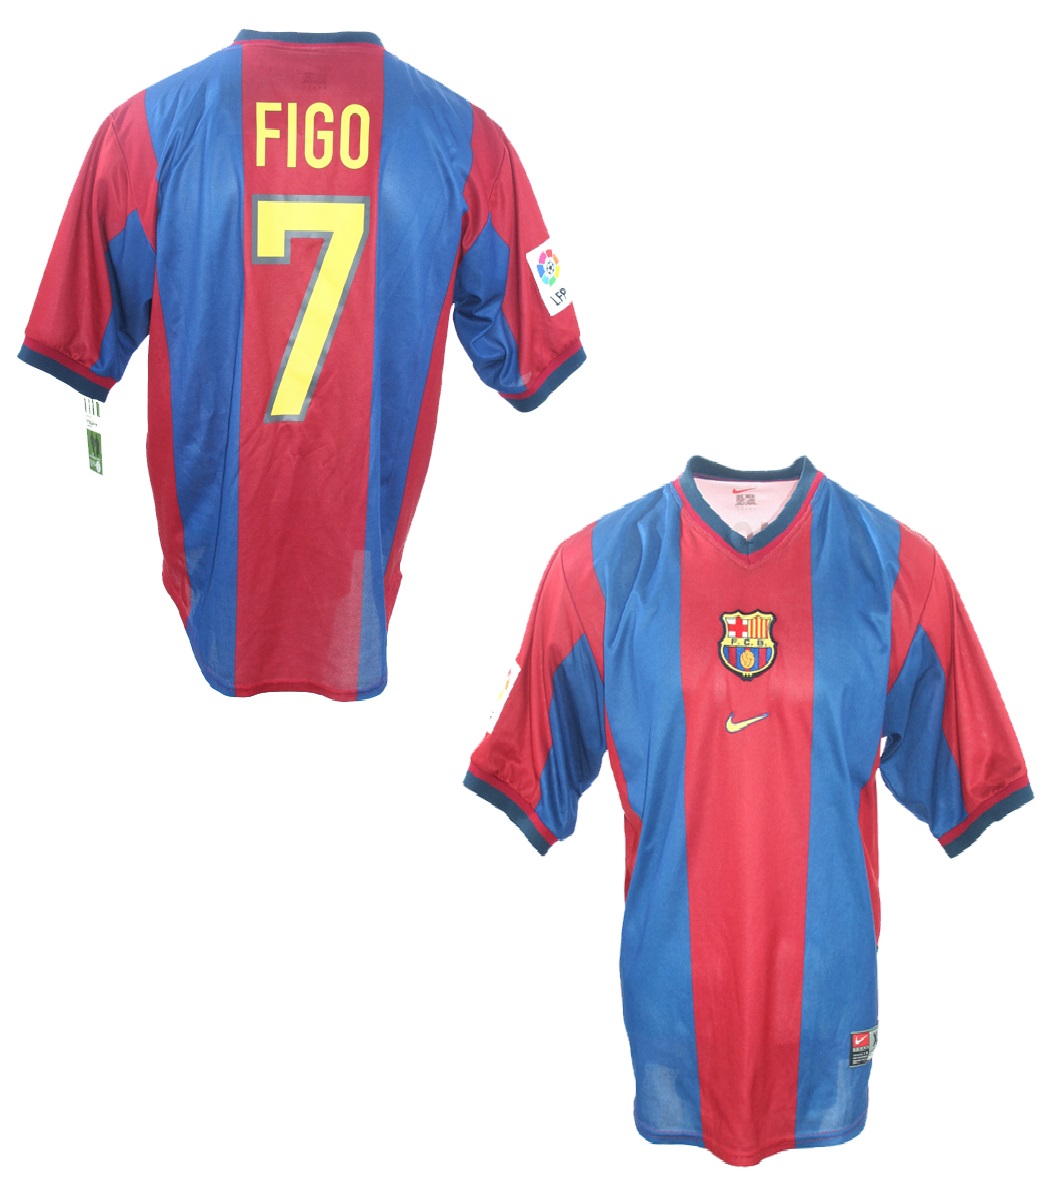 Nike FC Barcelona jersey 7 Luis Figo 1998/99 home men's S/M/L/XL/XXL